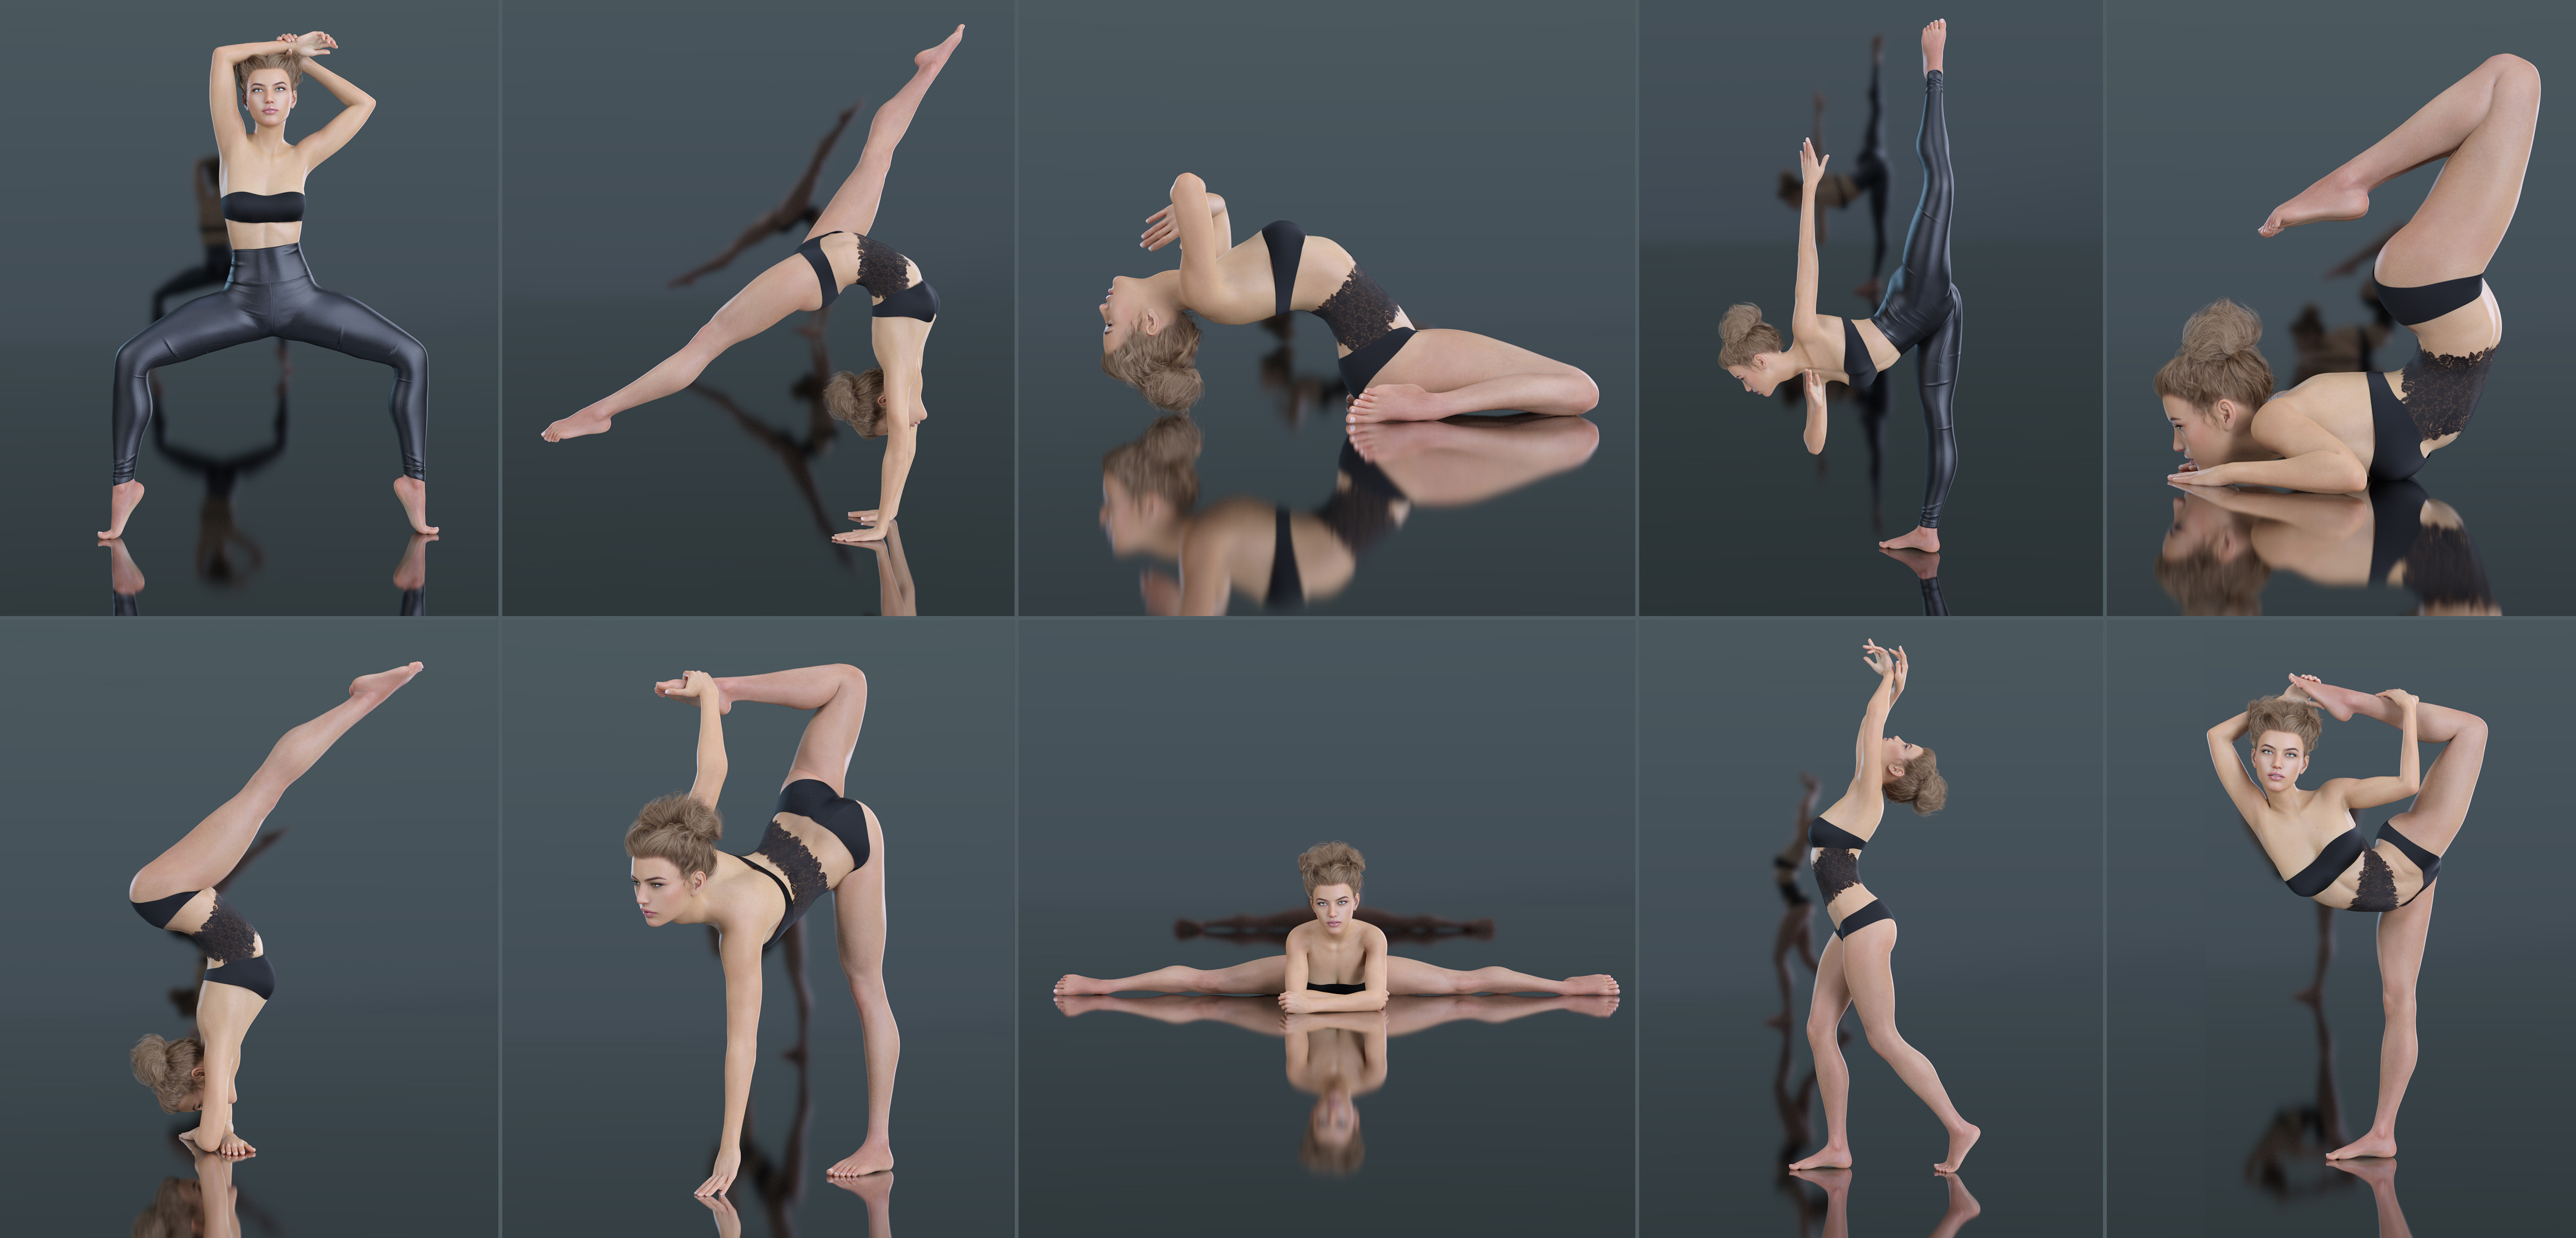 Z Gymnast Beauty Shape and Pose Mega Set for Genesis 8 and 8.1 Female by: Zeddicuss, 3D Models by Daz 3D